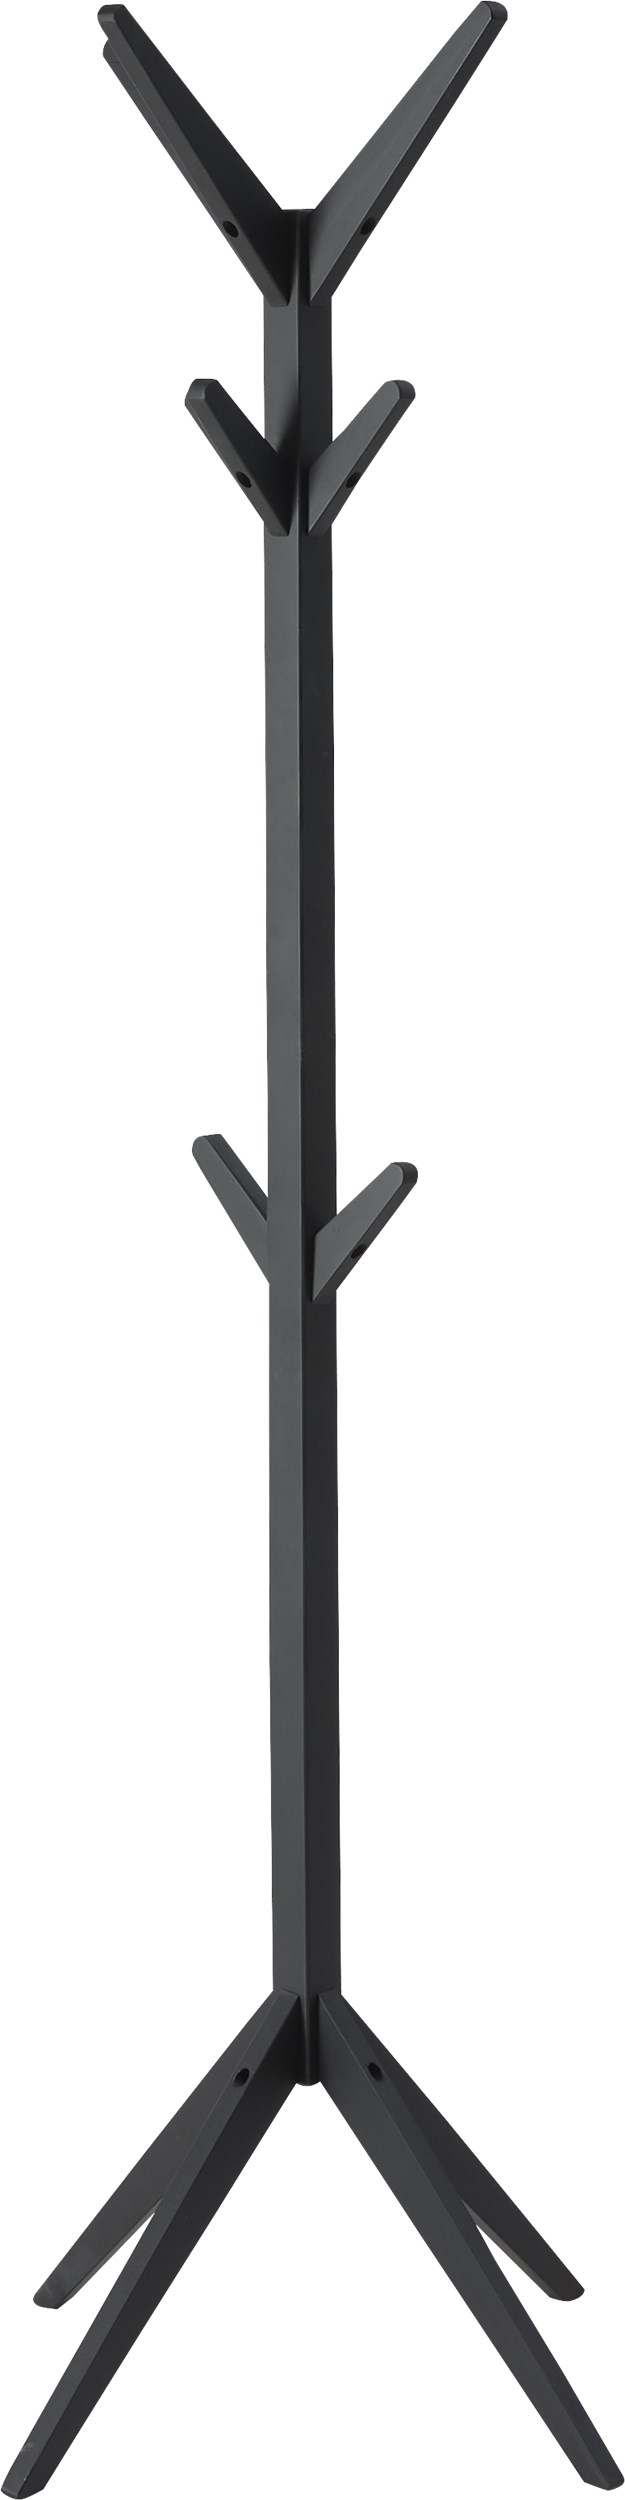 Rørbæk Stumtjener 45 x 178 x 45 cm - Sortmalet birk